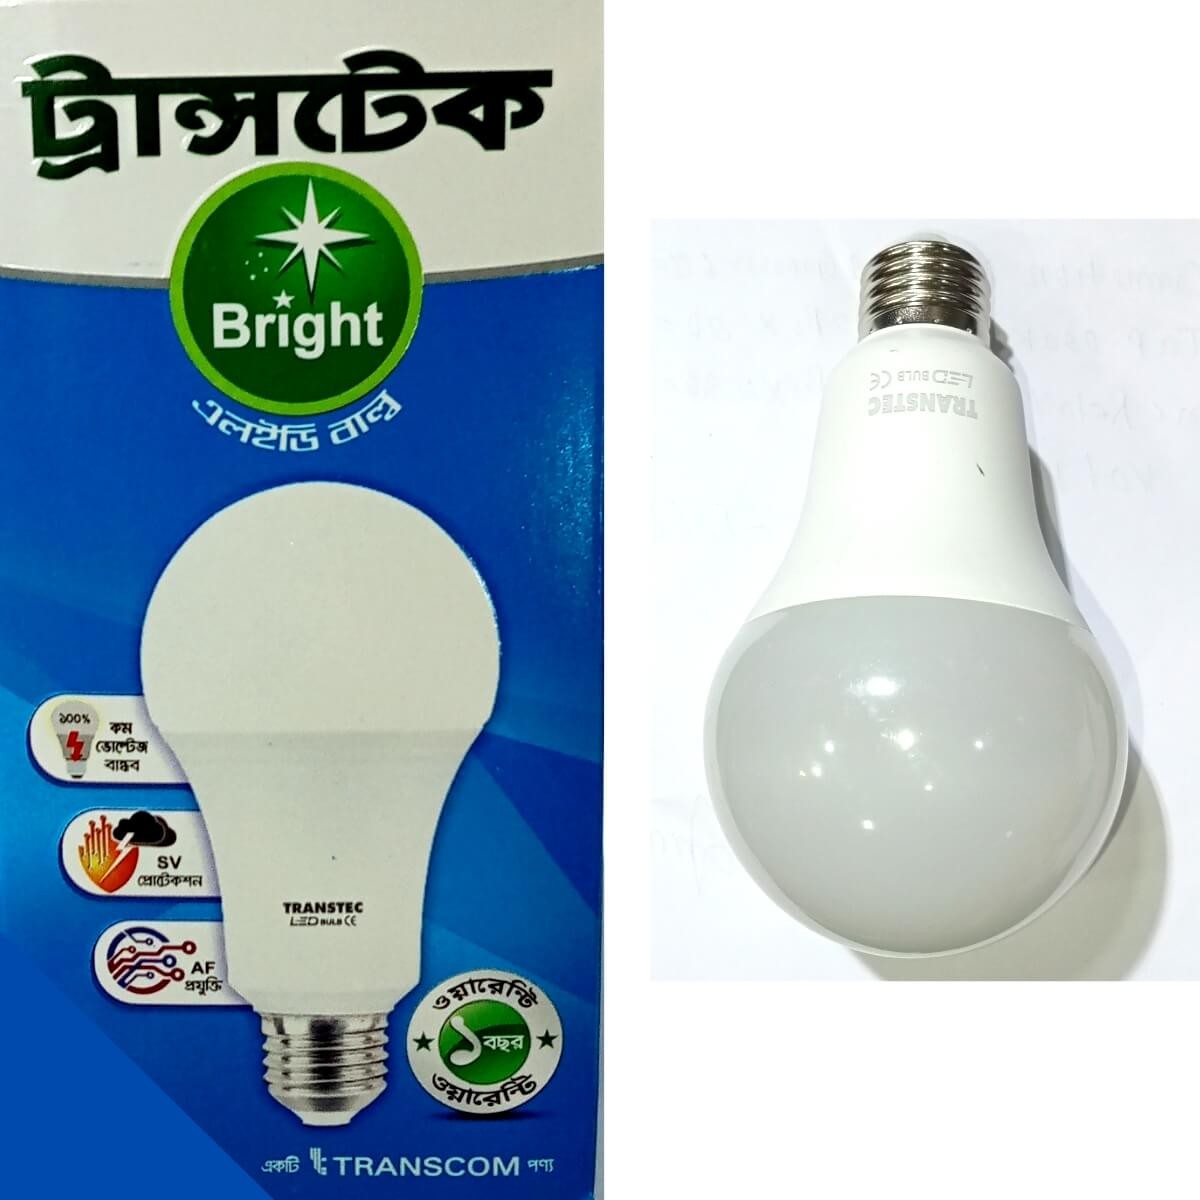 Transtec Bright 15Watt LED Bulb প্যাচ টাইপ... BD